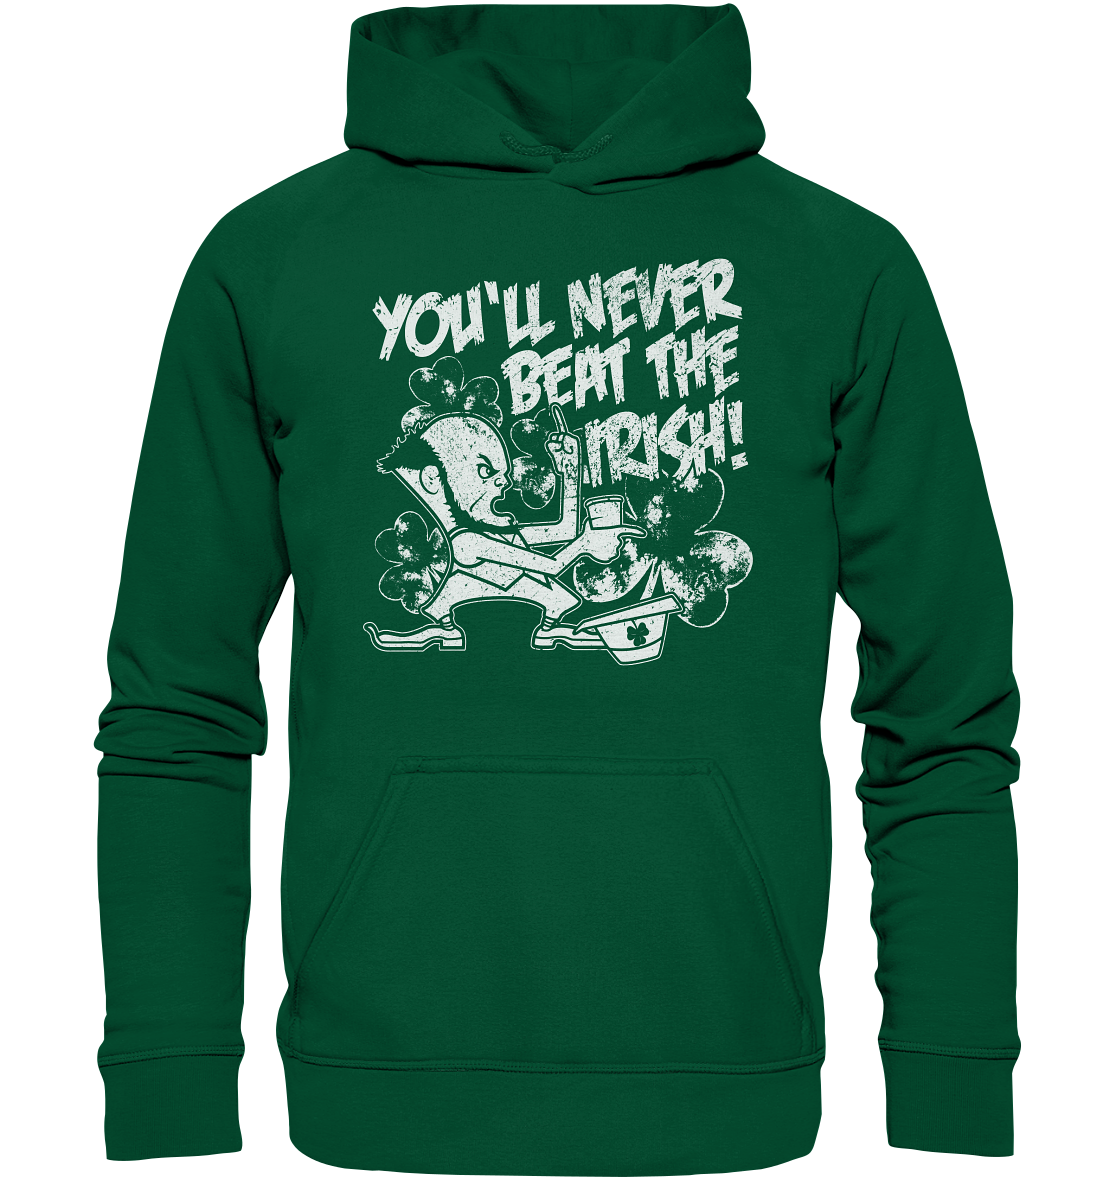 "You'll Never Beat The Irish" - Basic Unisex Hoodie